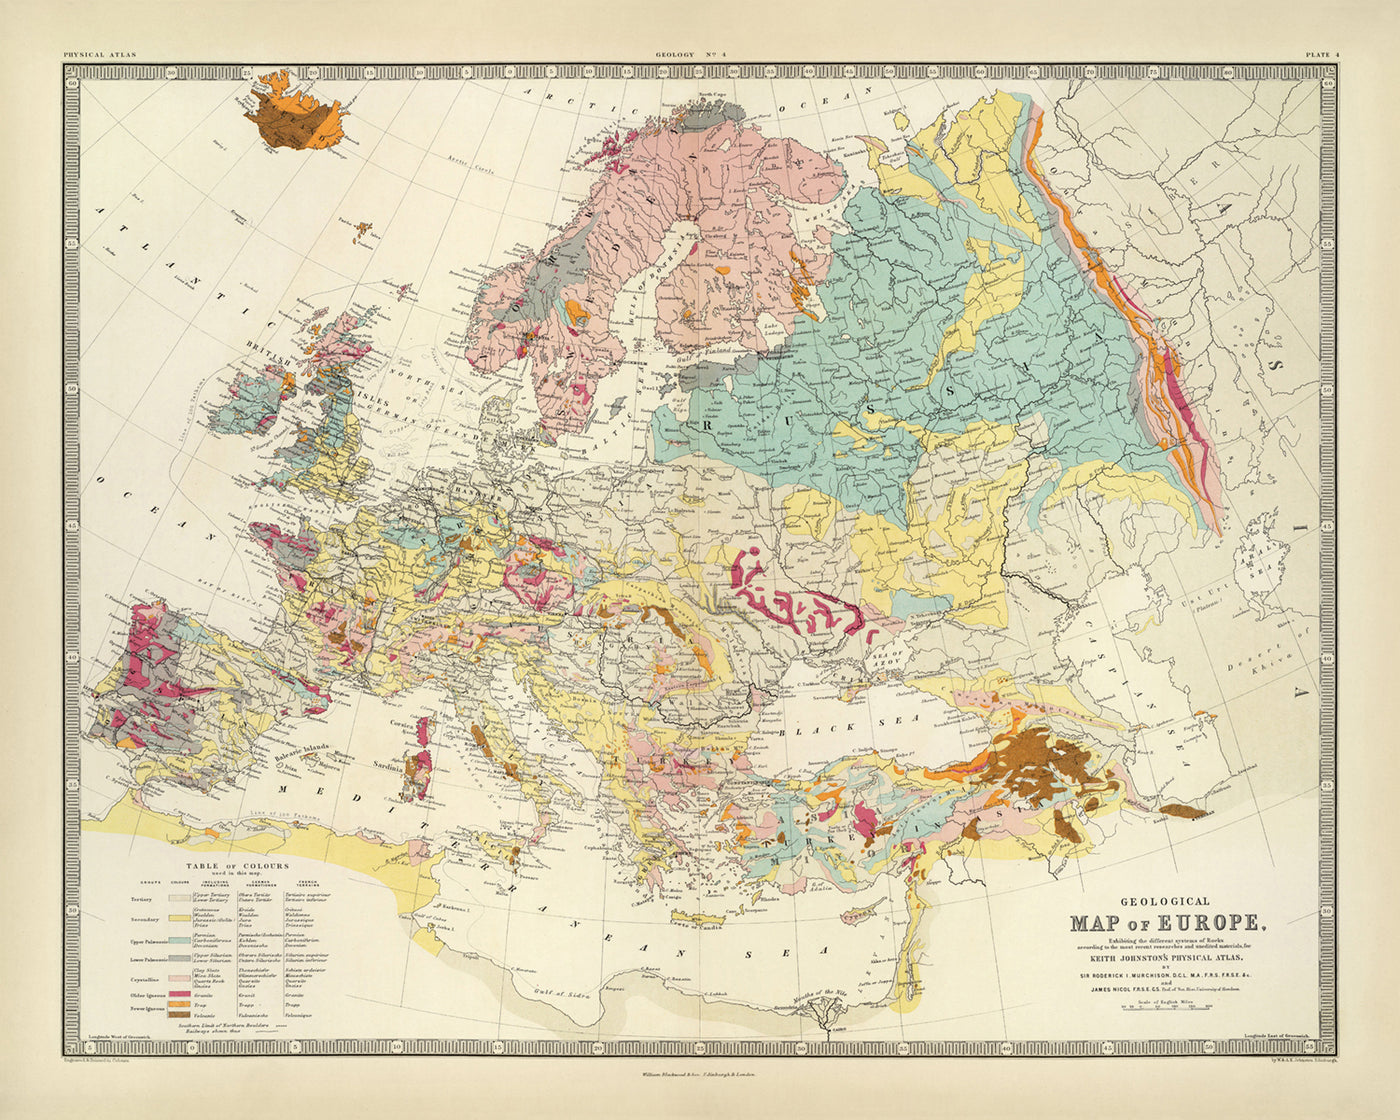 Antiguo mapa geológico de Europa por AK Johnston, 1856: Mapa geológico de montañas, rocas y estratos